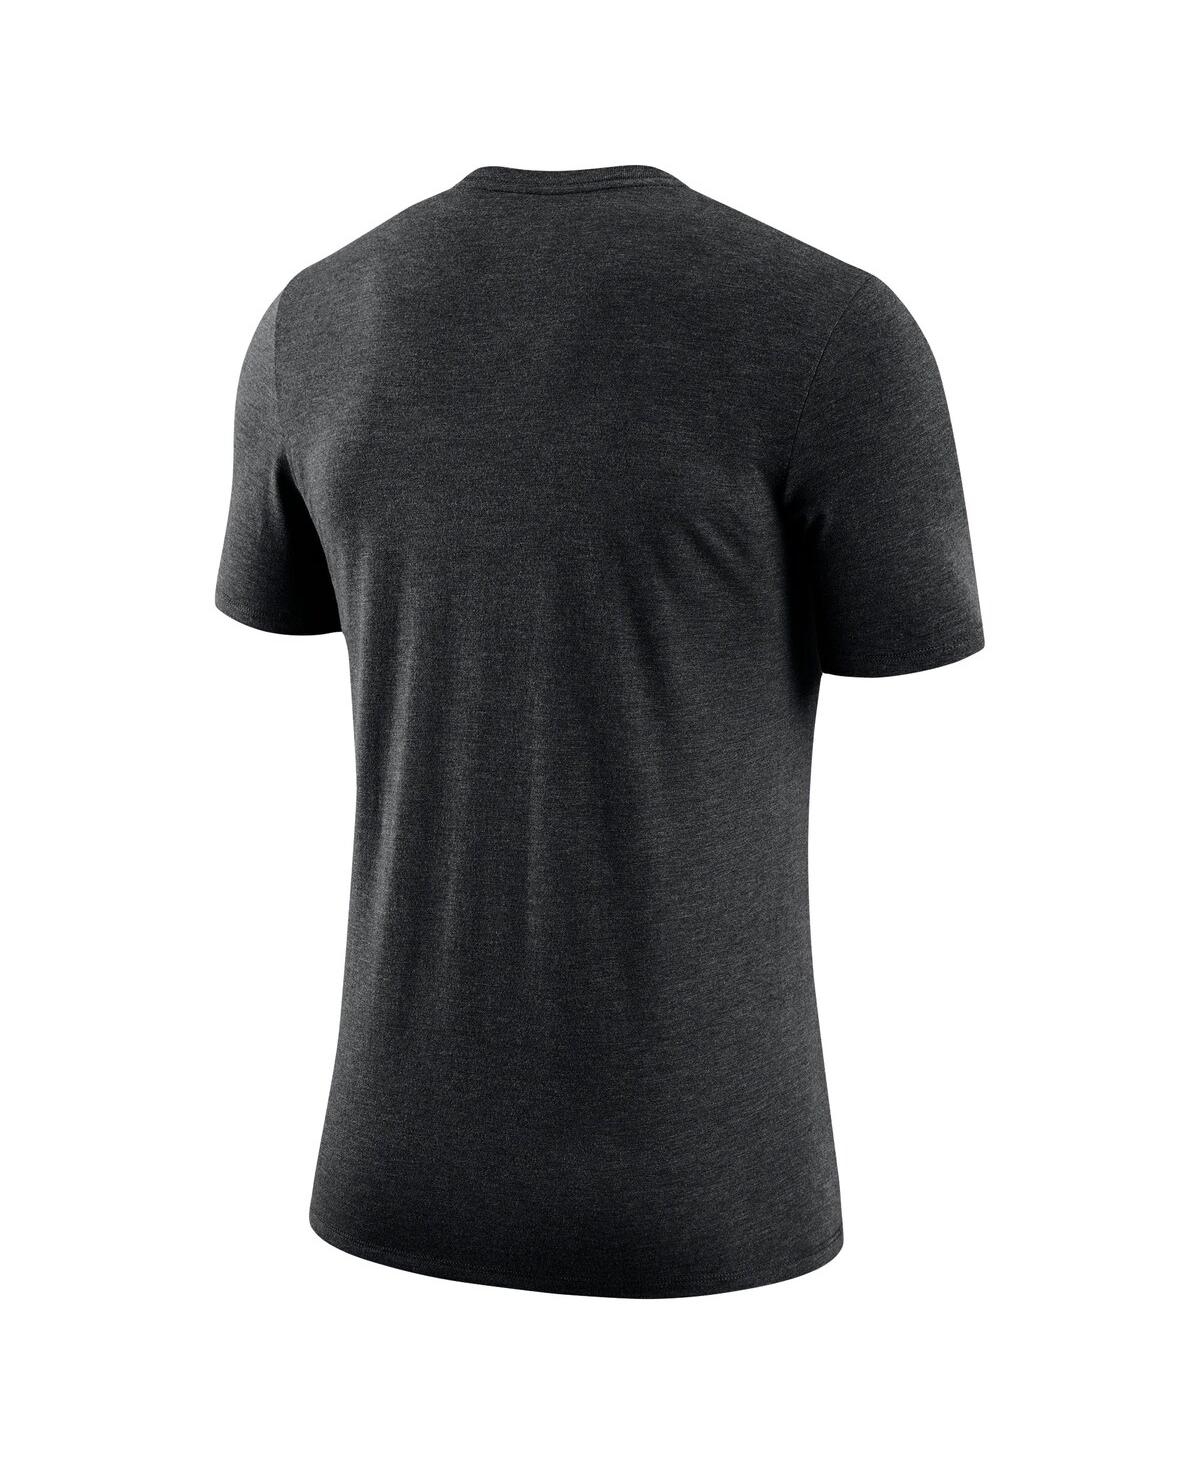 Shop Nike Men's  Black Distressed Iowa Hawkeyes Retro Tri-blend T-shirt